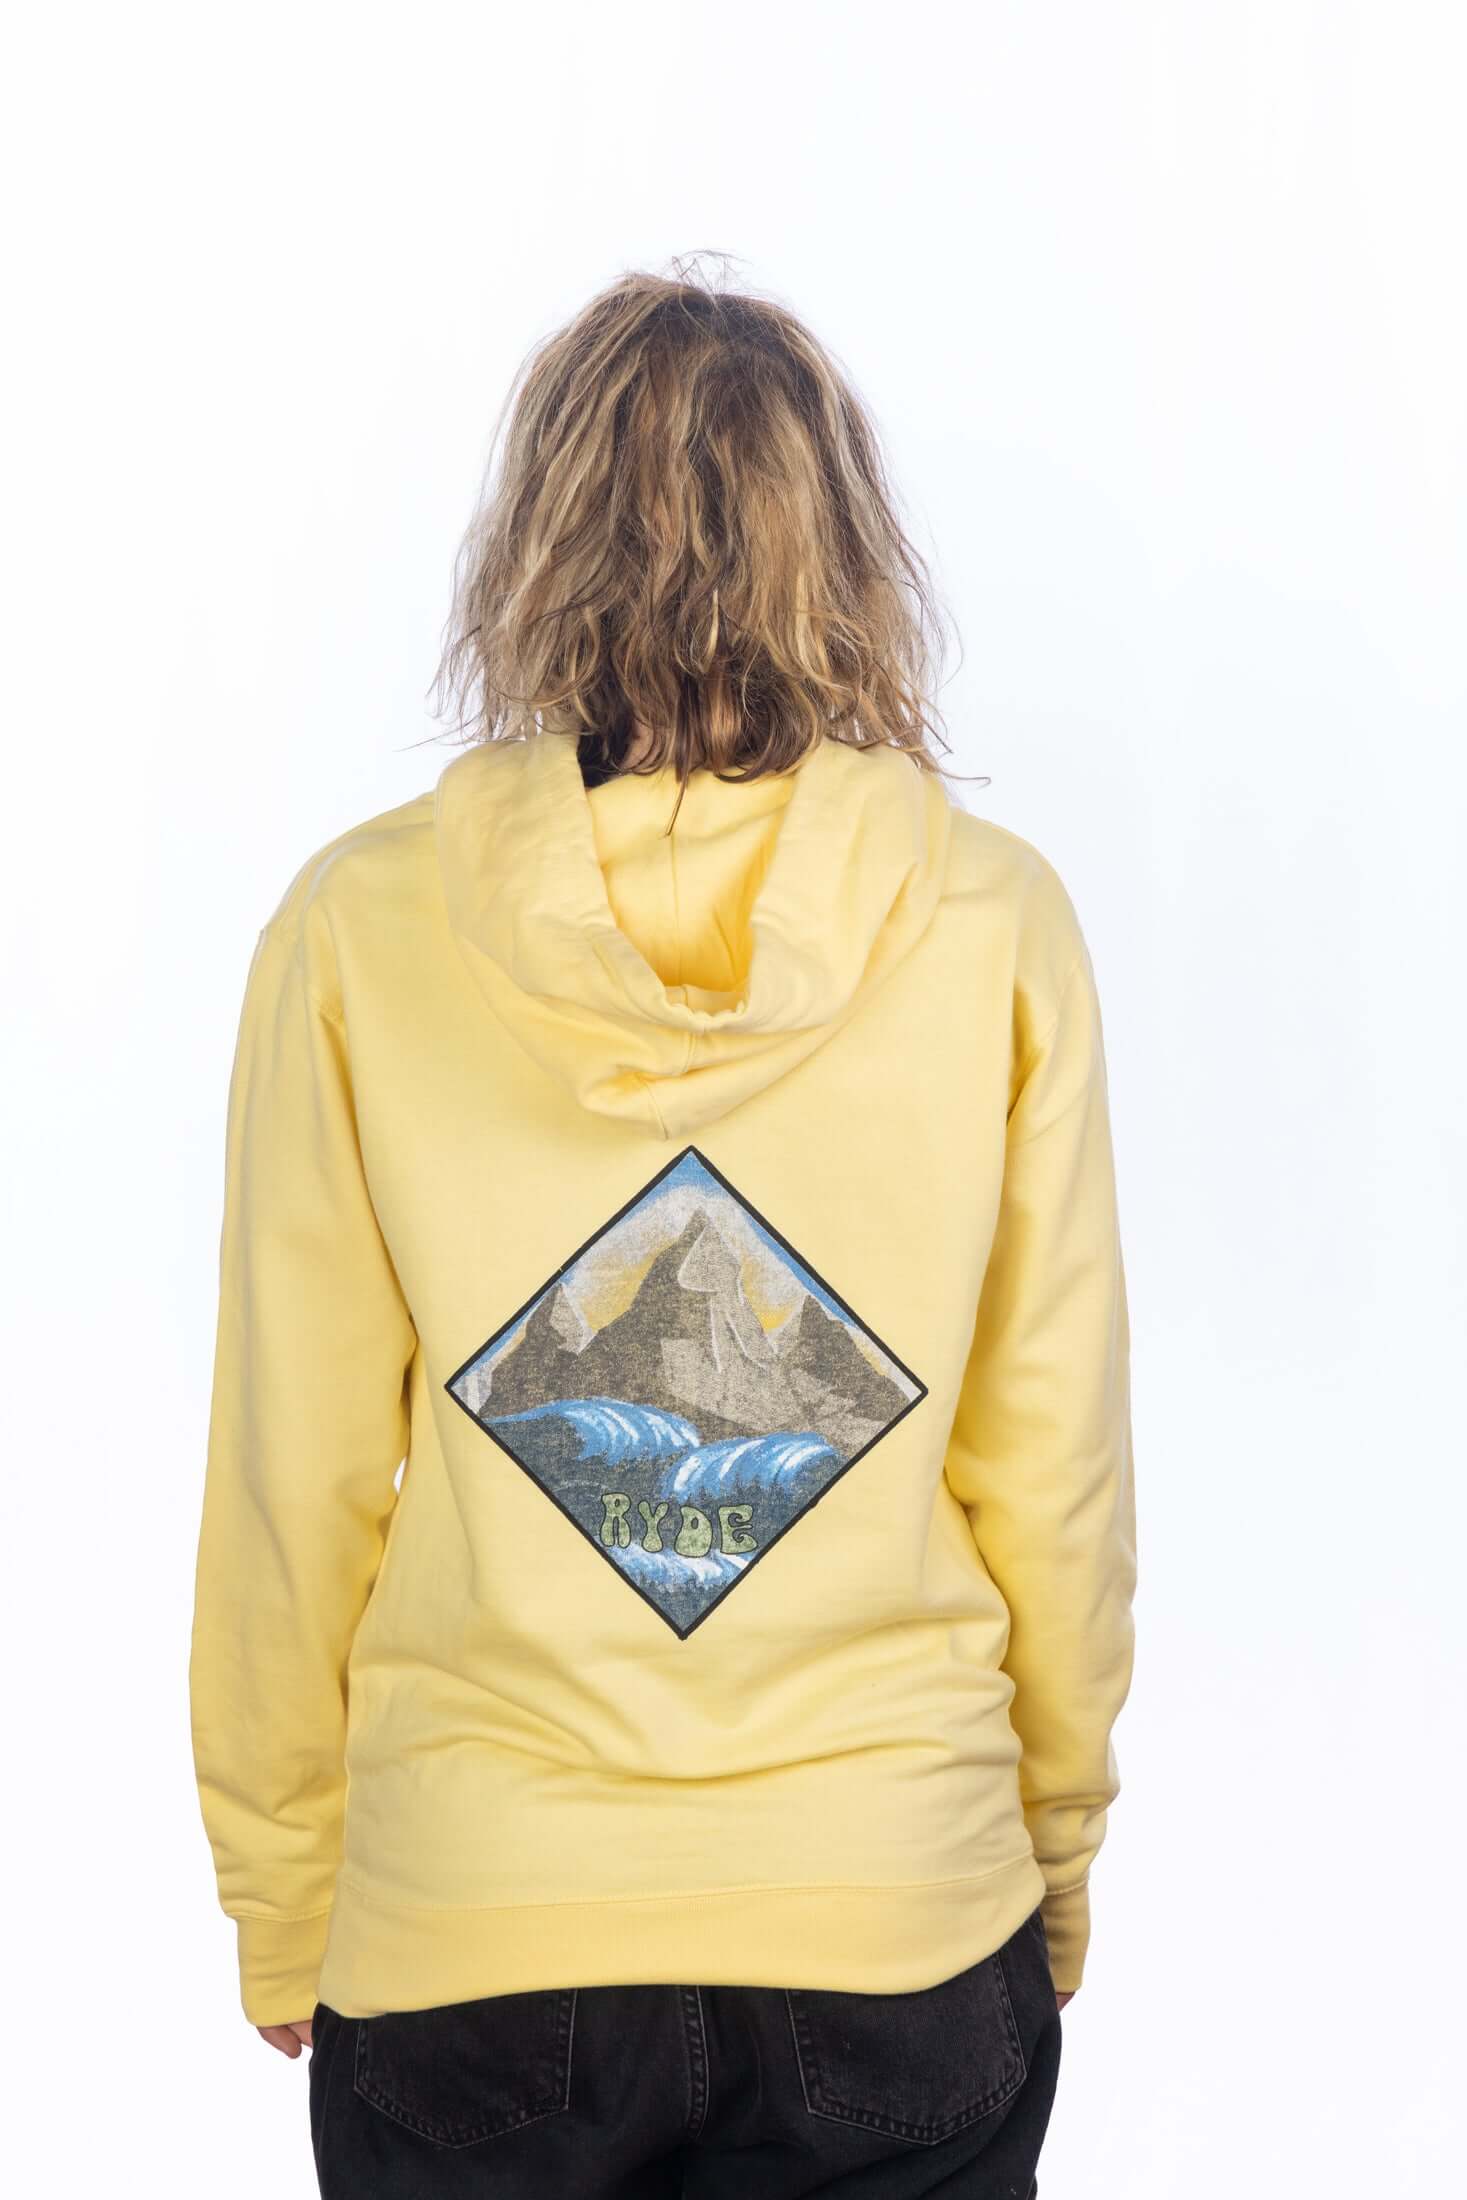 ryde 4 lyfe - Free Flow Hooded Sweatshirt - yellow - back